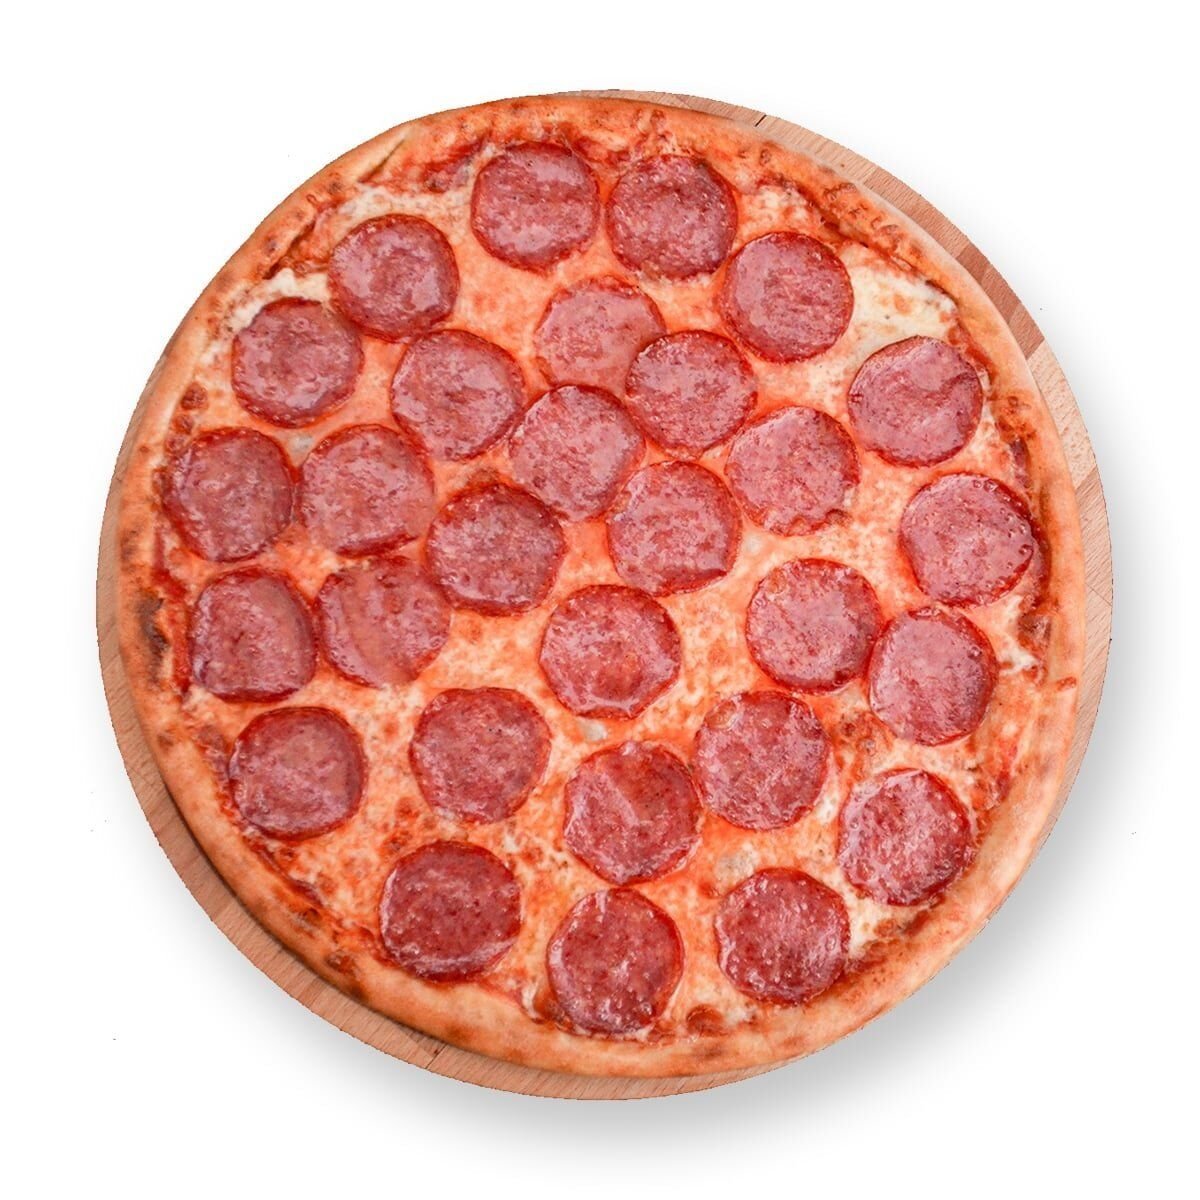 пепперони пицца фото на белом фоне фото 111